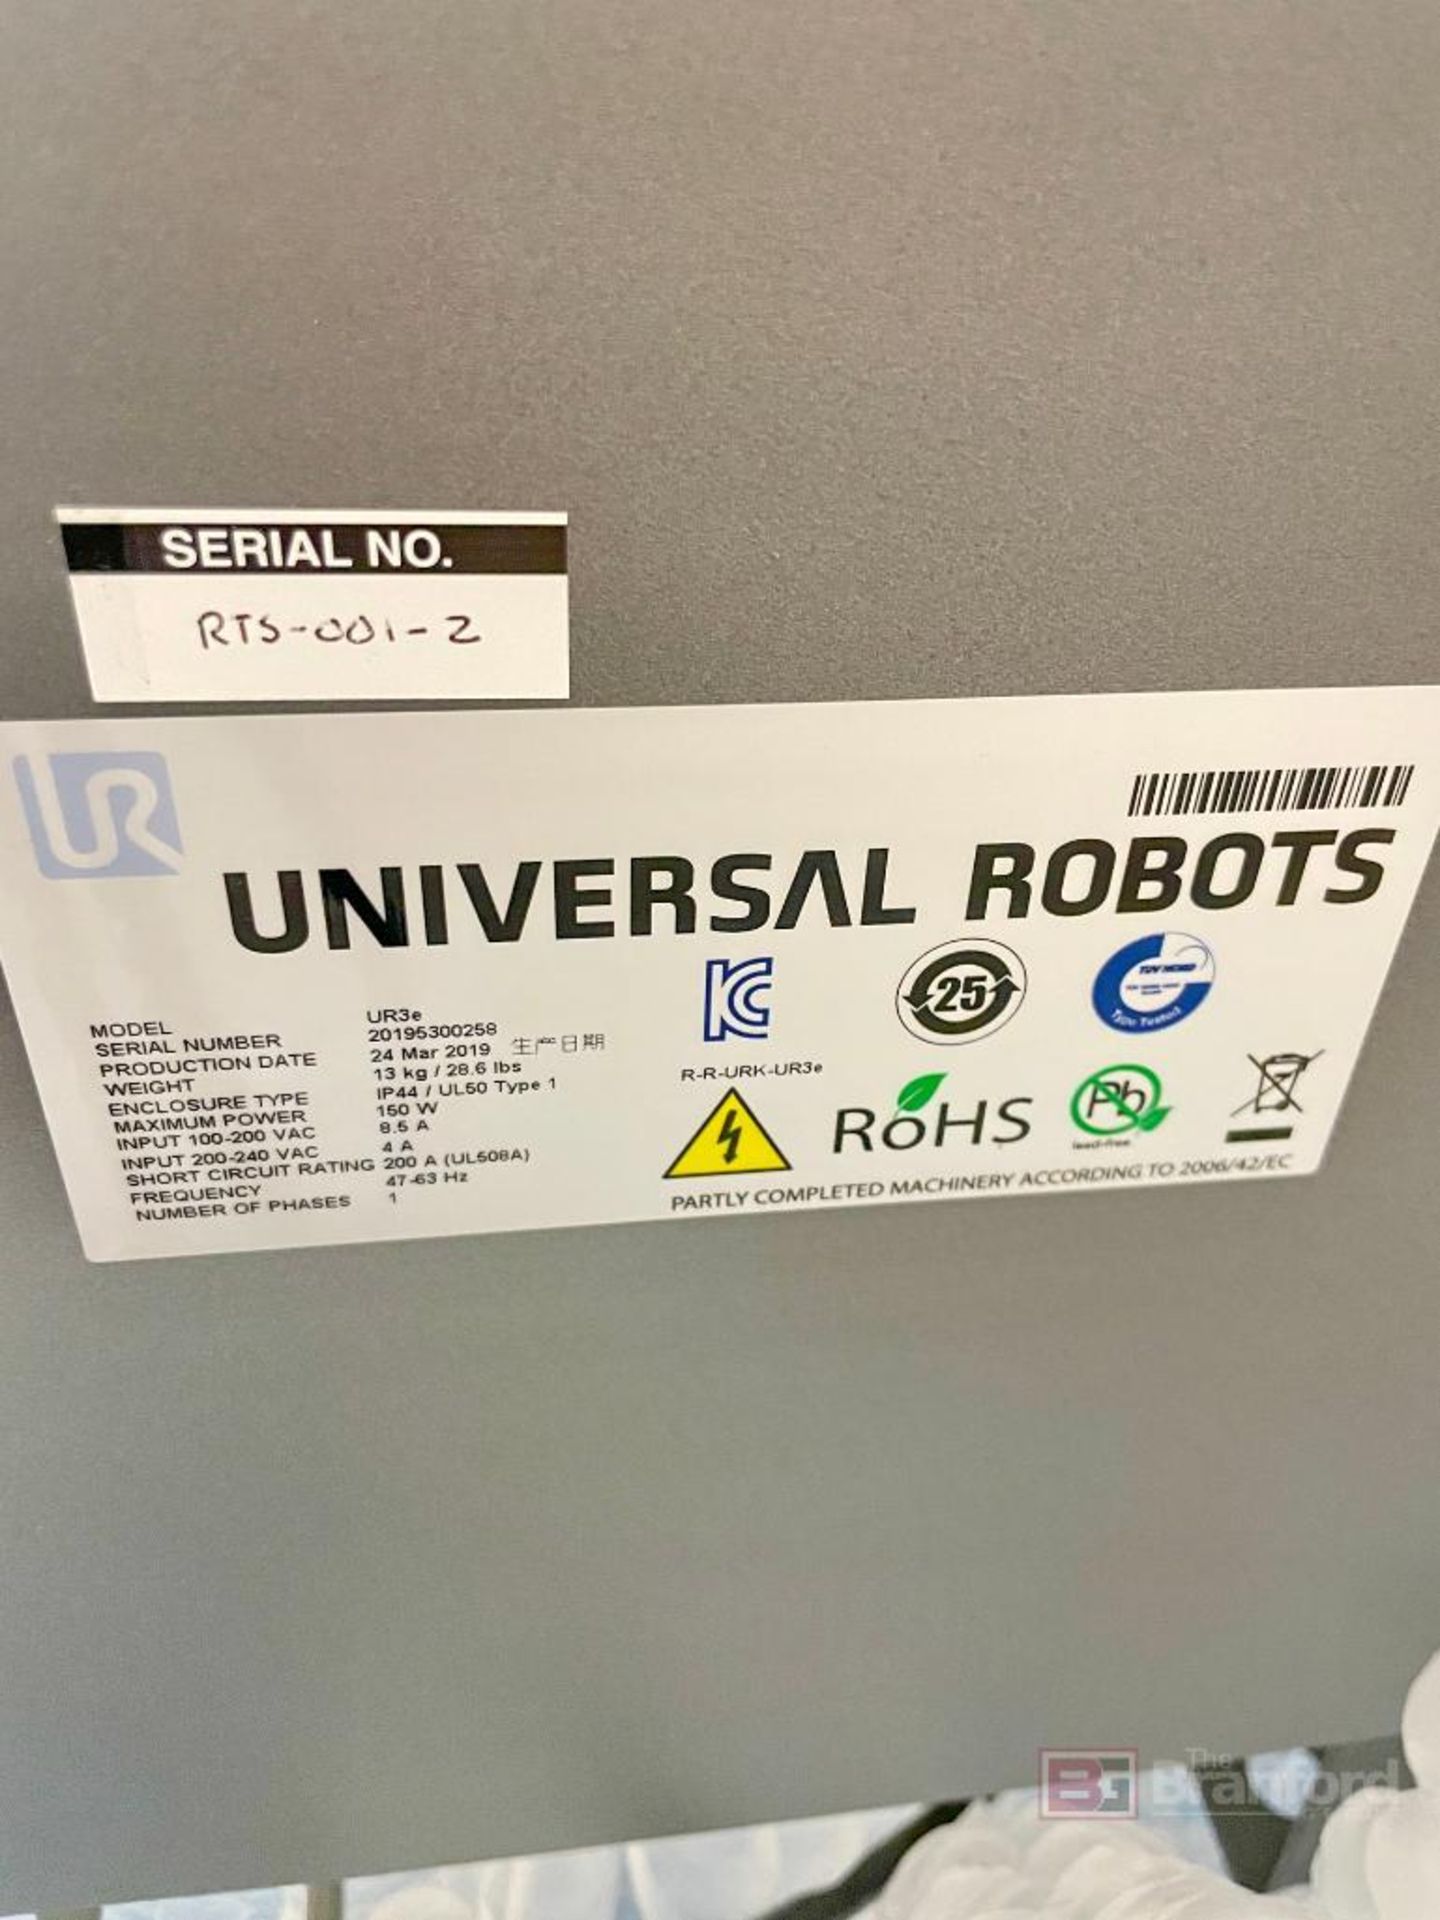 UR3e collaborative robot